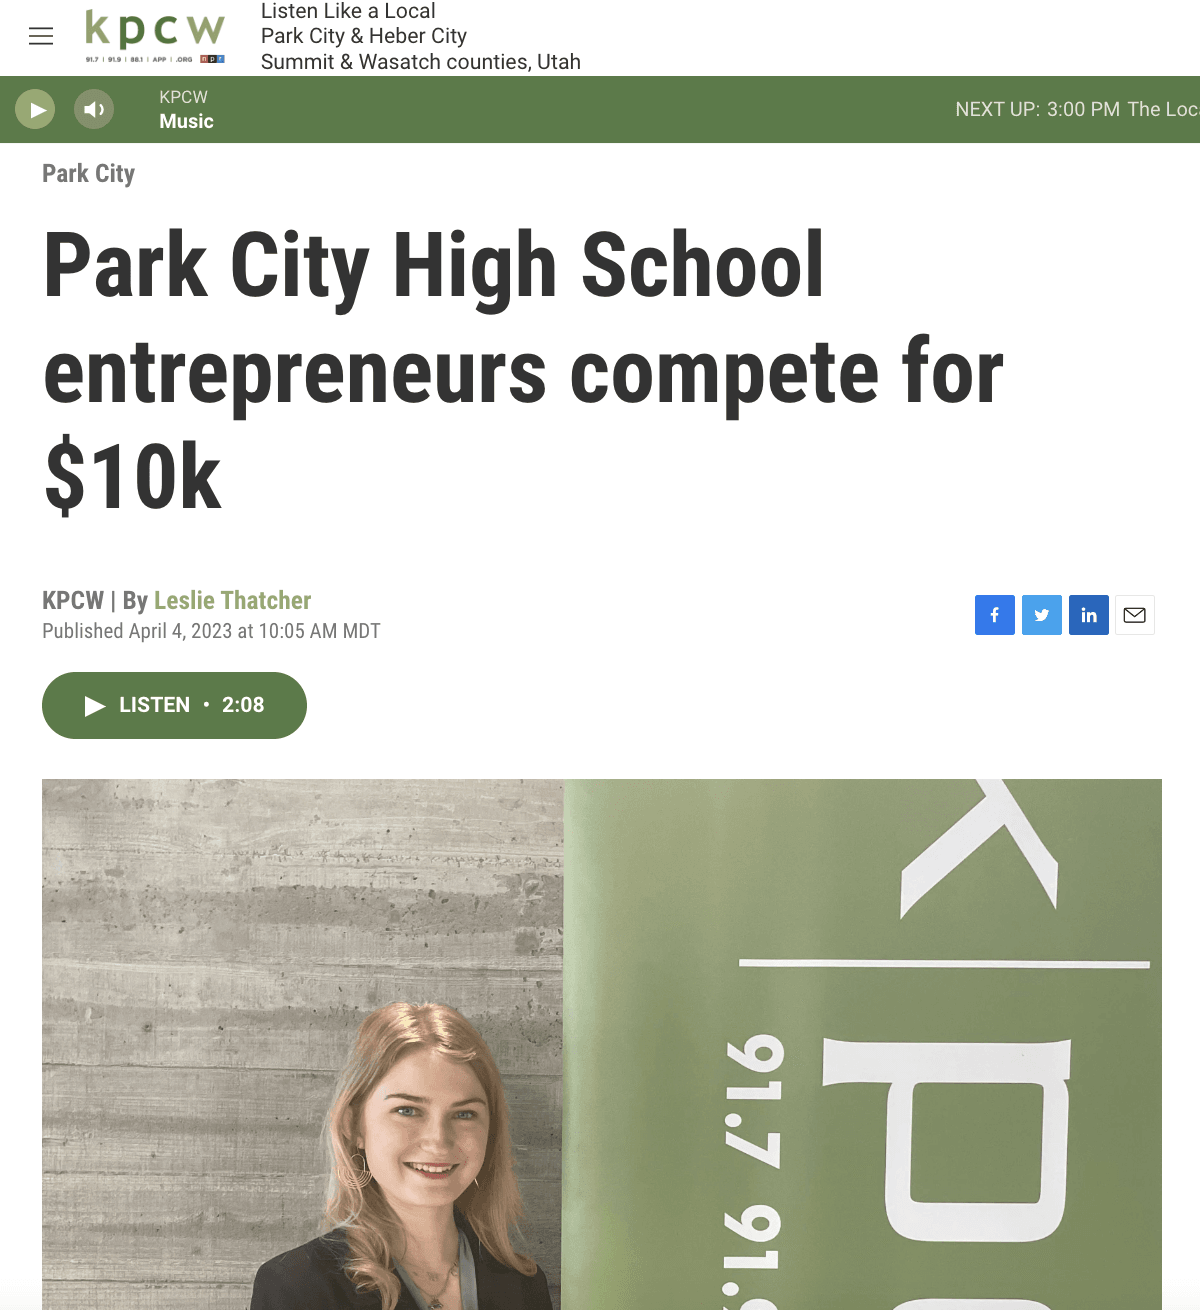 Park City High School Entrepreneurs Compete for $10k